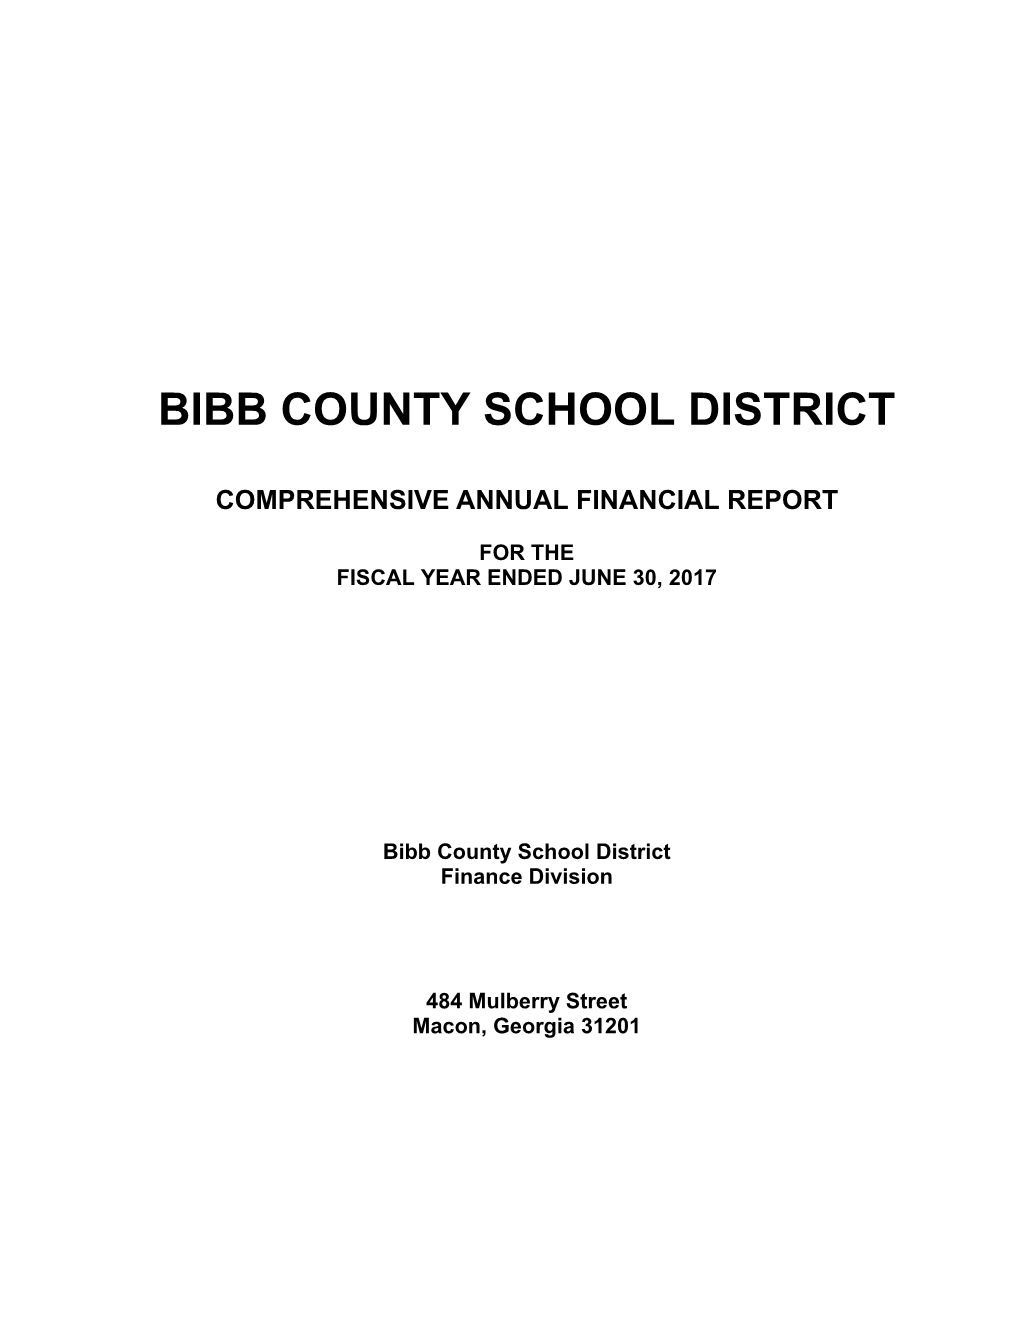 Bibb County School District